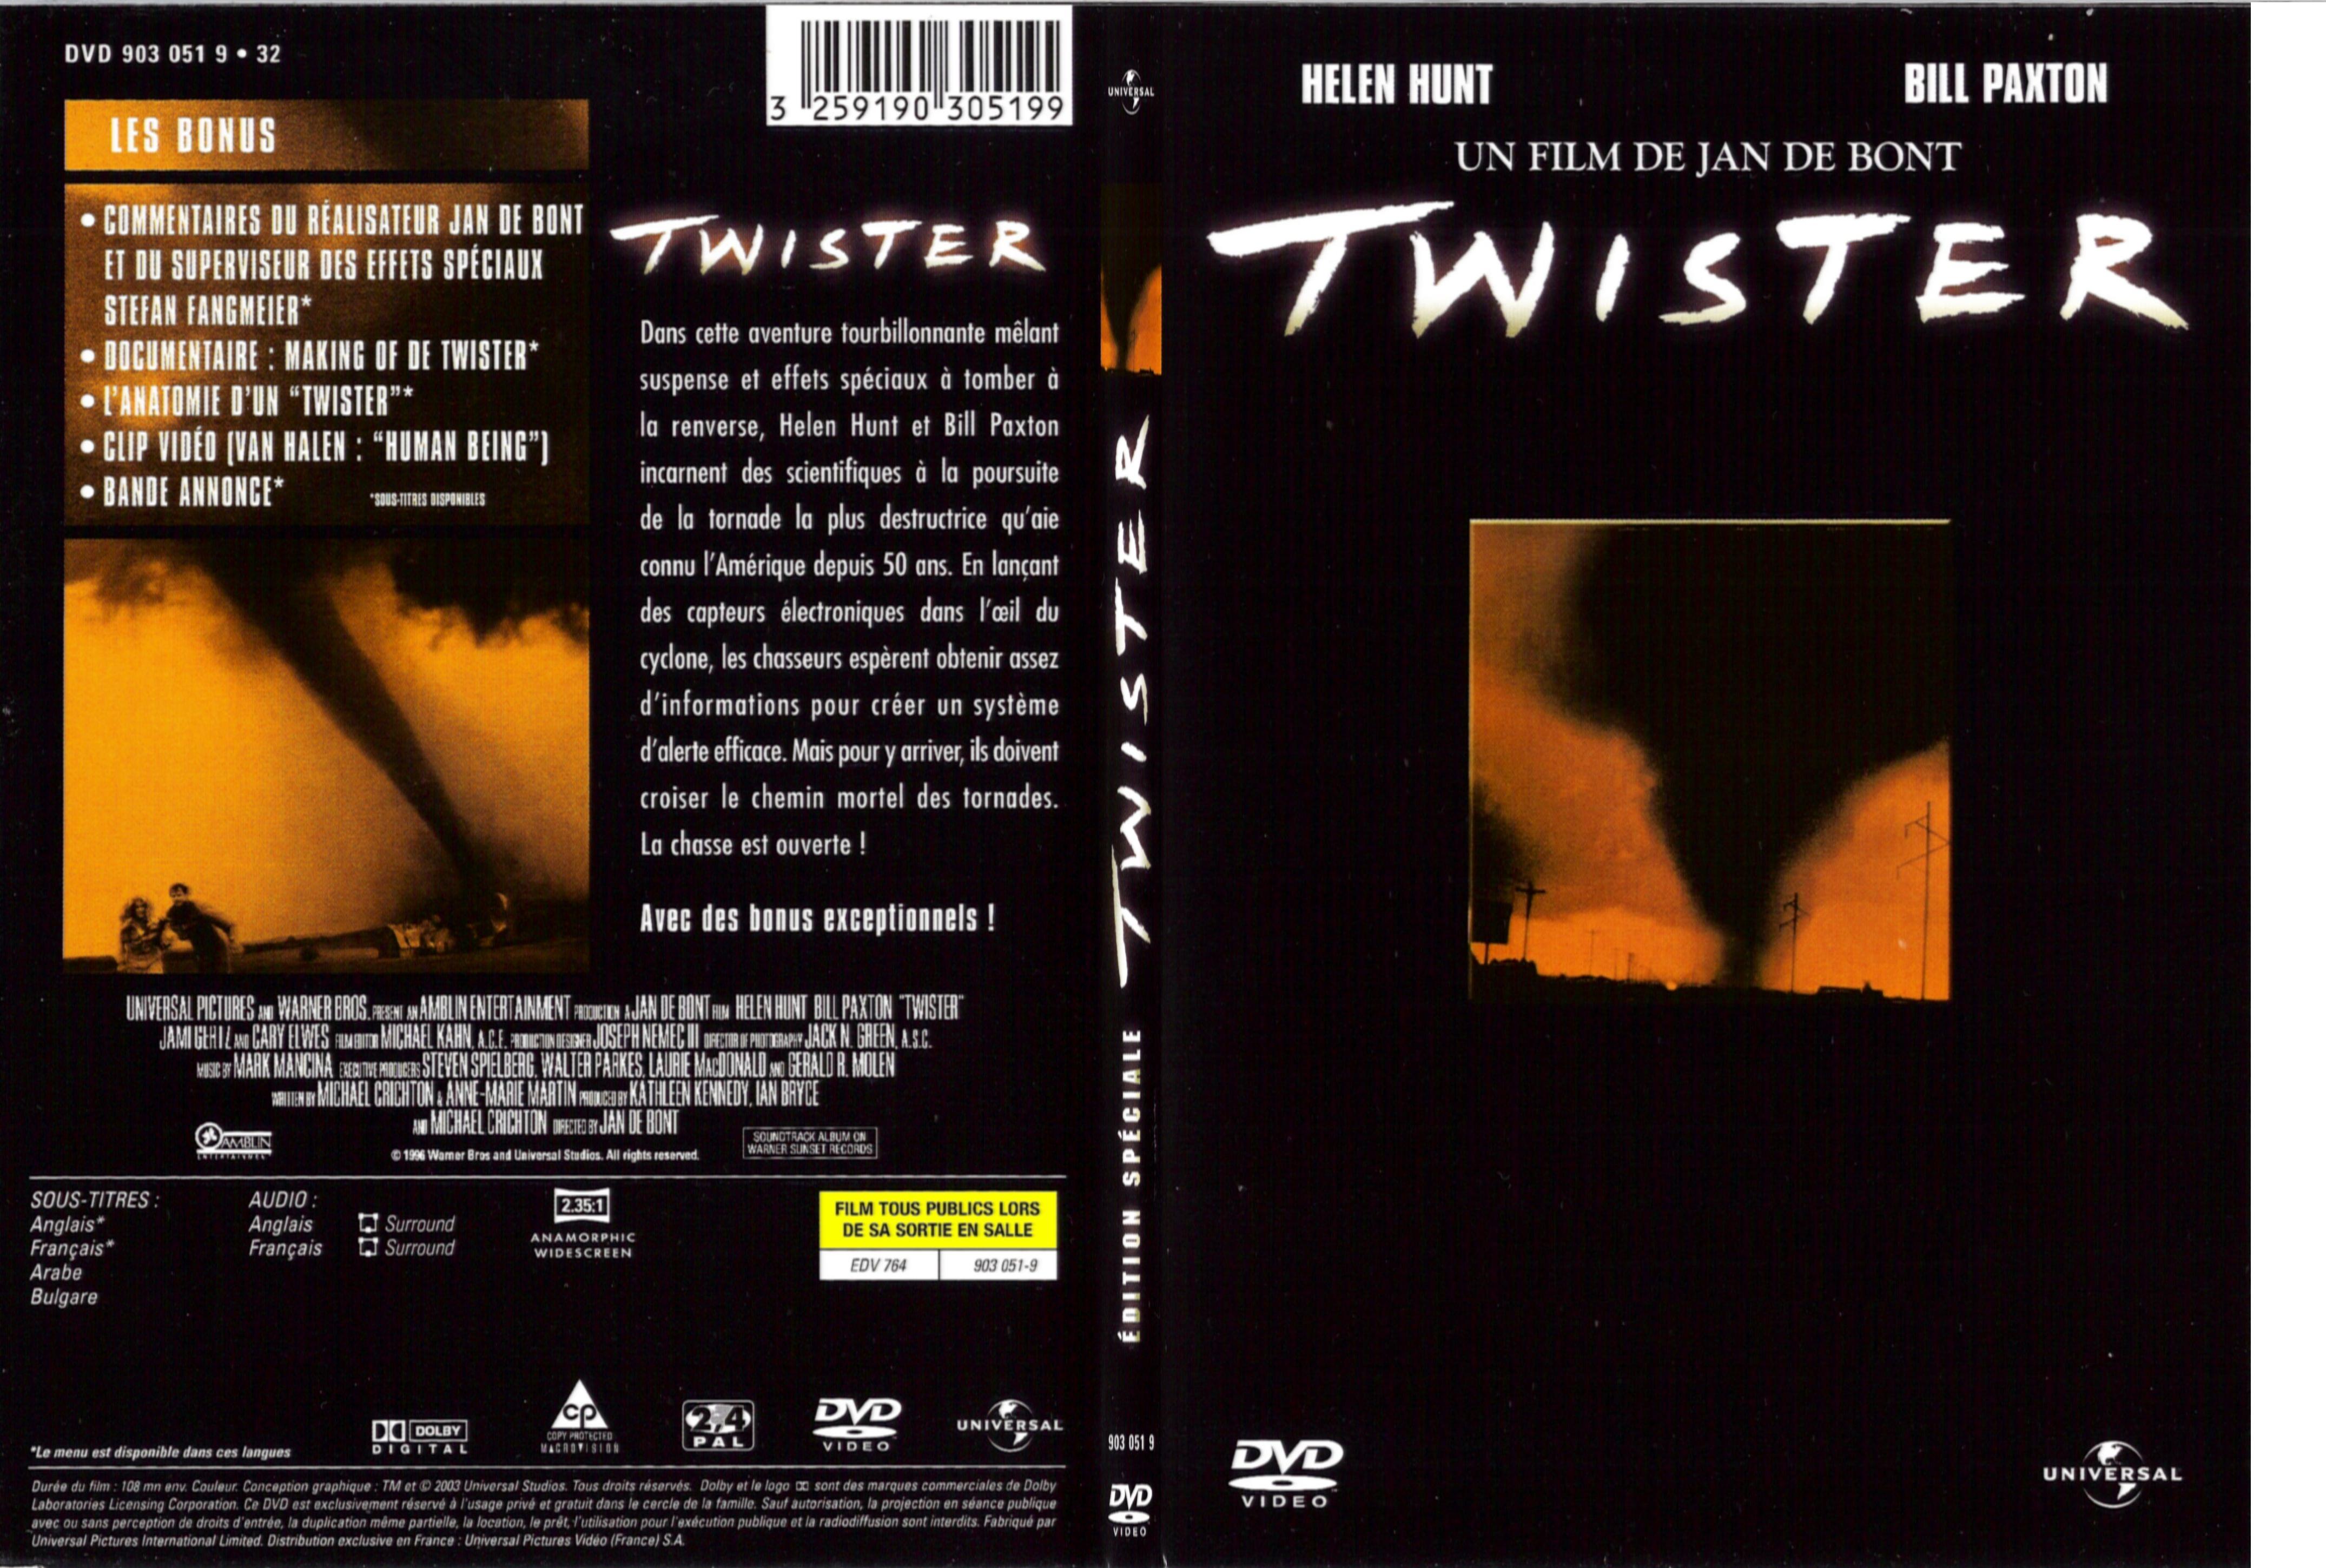 Jaquette DVD Twister - SLIM